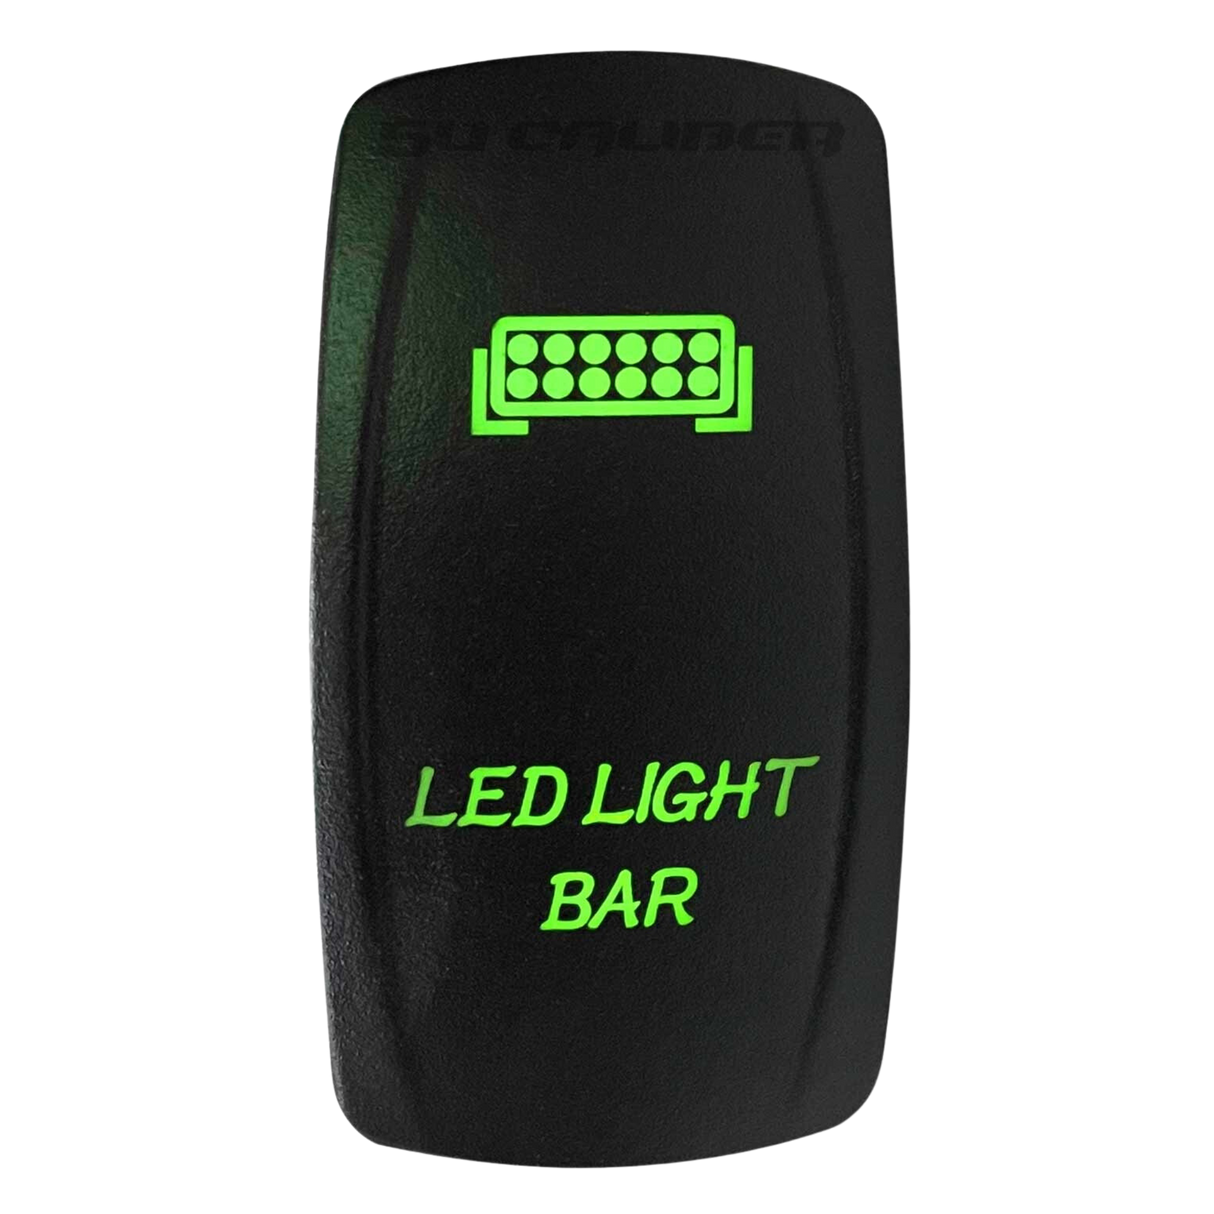 Illuminated LED Light Bar On/Off Rocker Switch